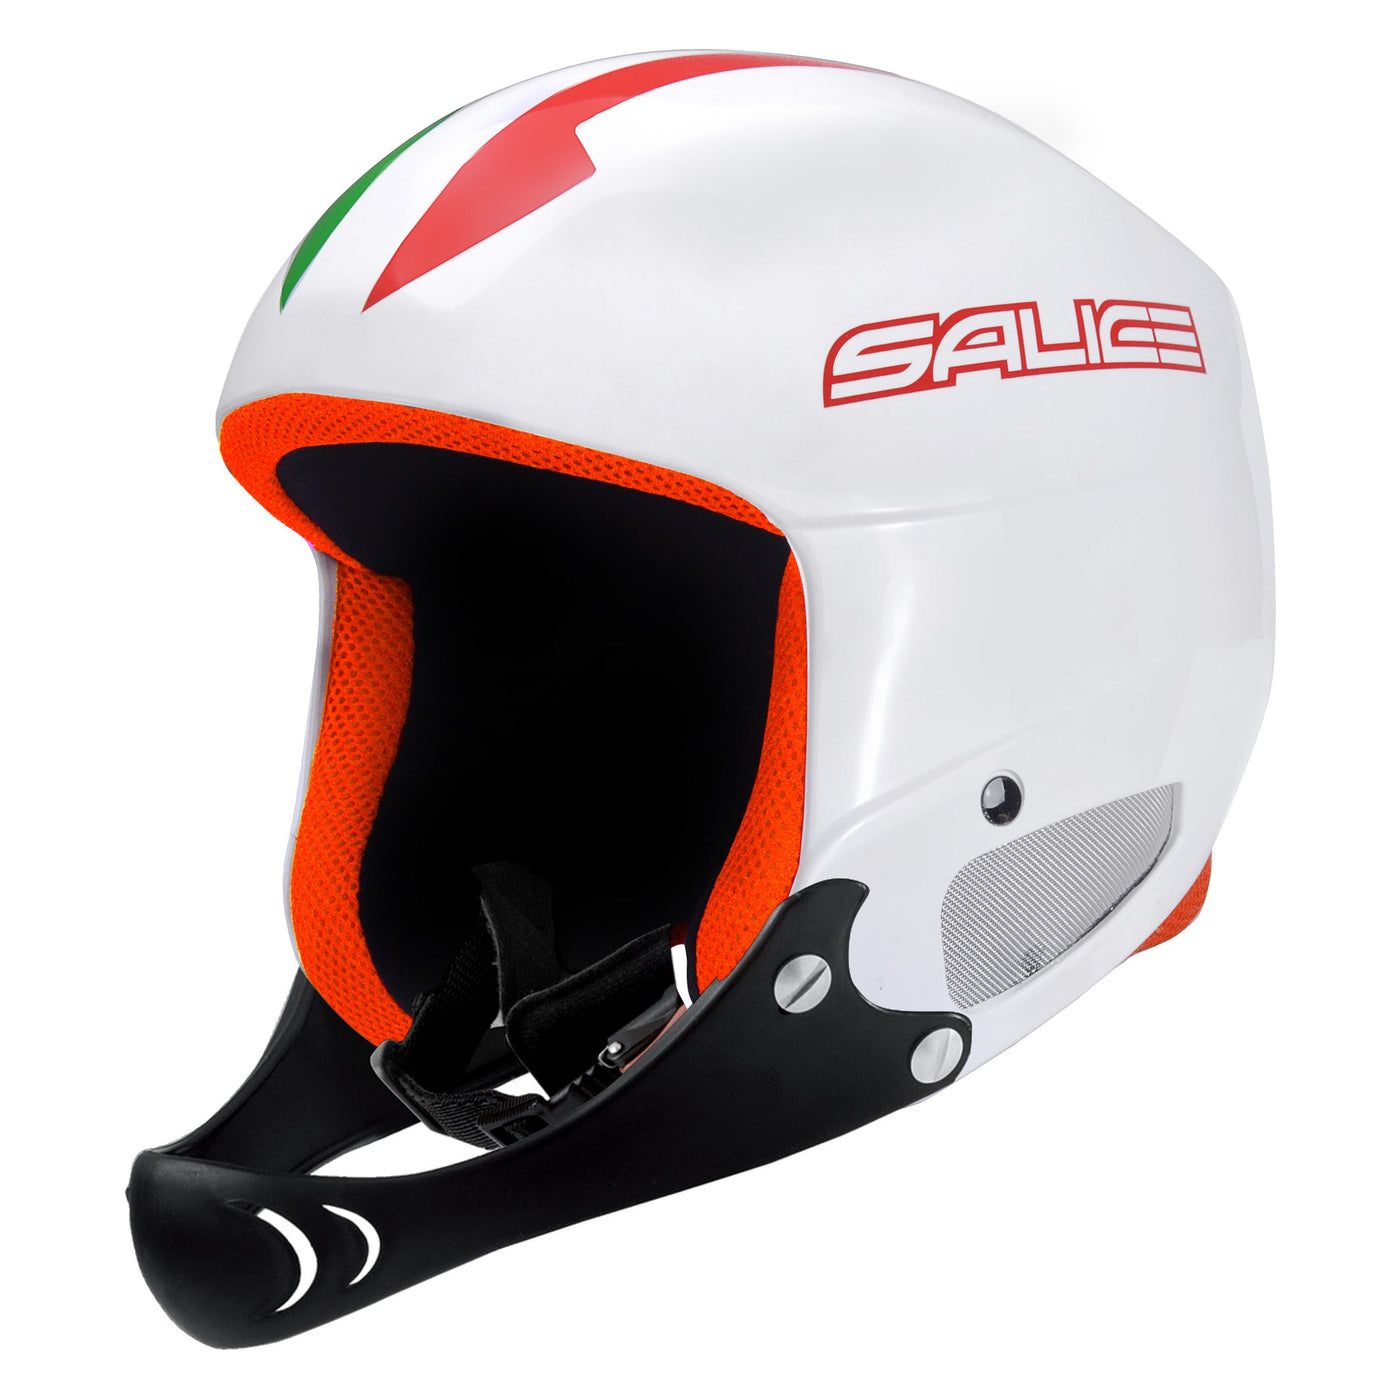 Salice Race Helmet White